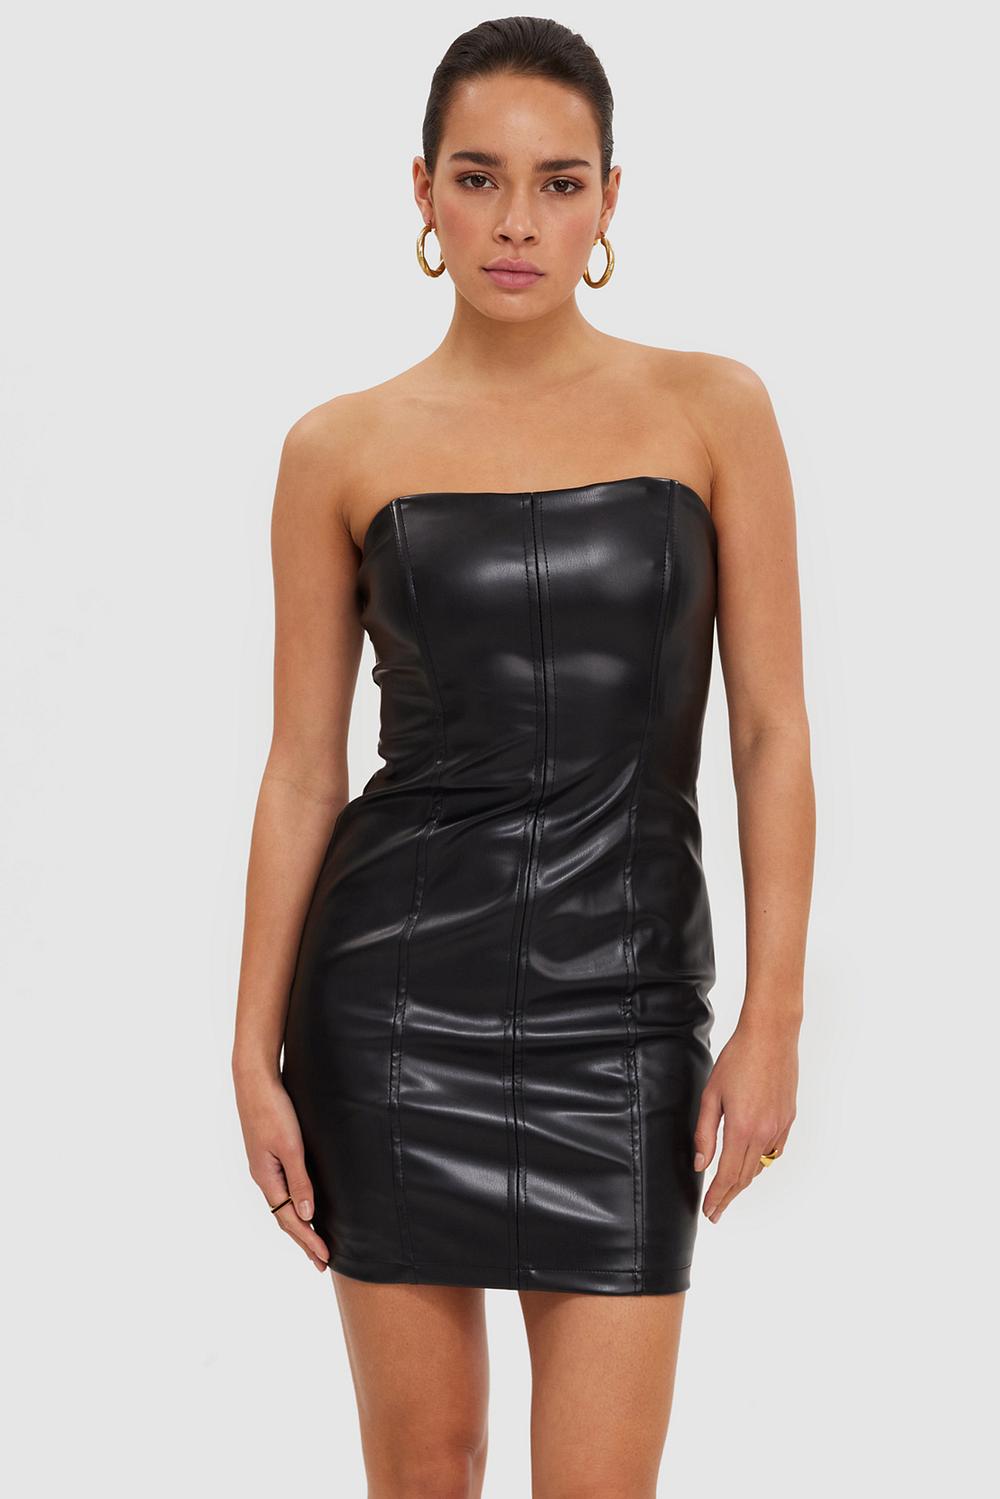 Black PU leather dress